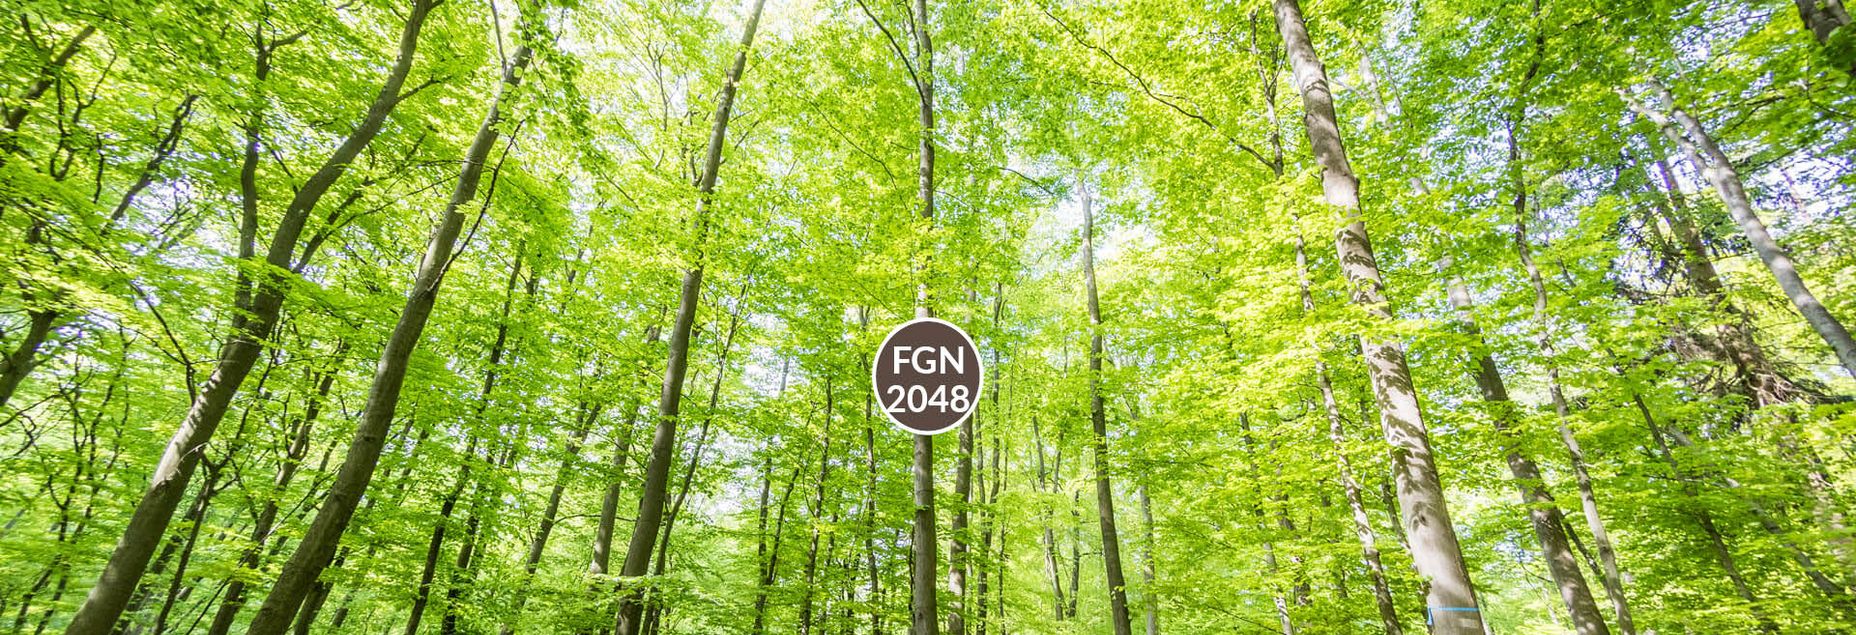 Baum FGN 2048 - Fisheyeperspektive